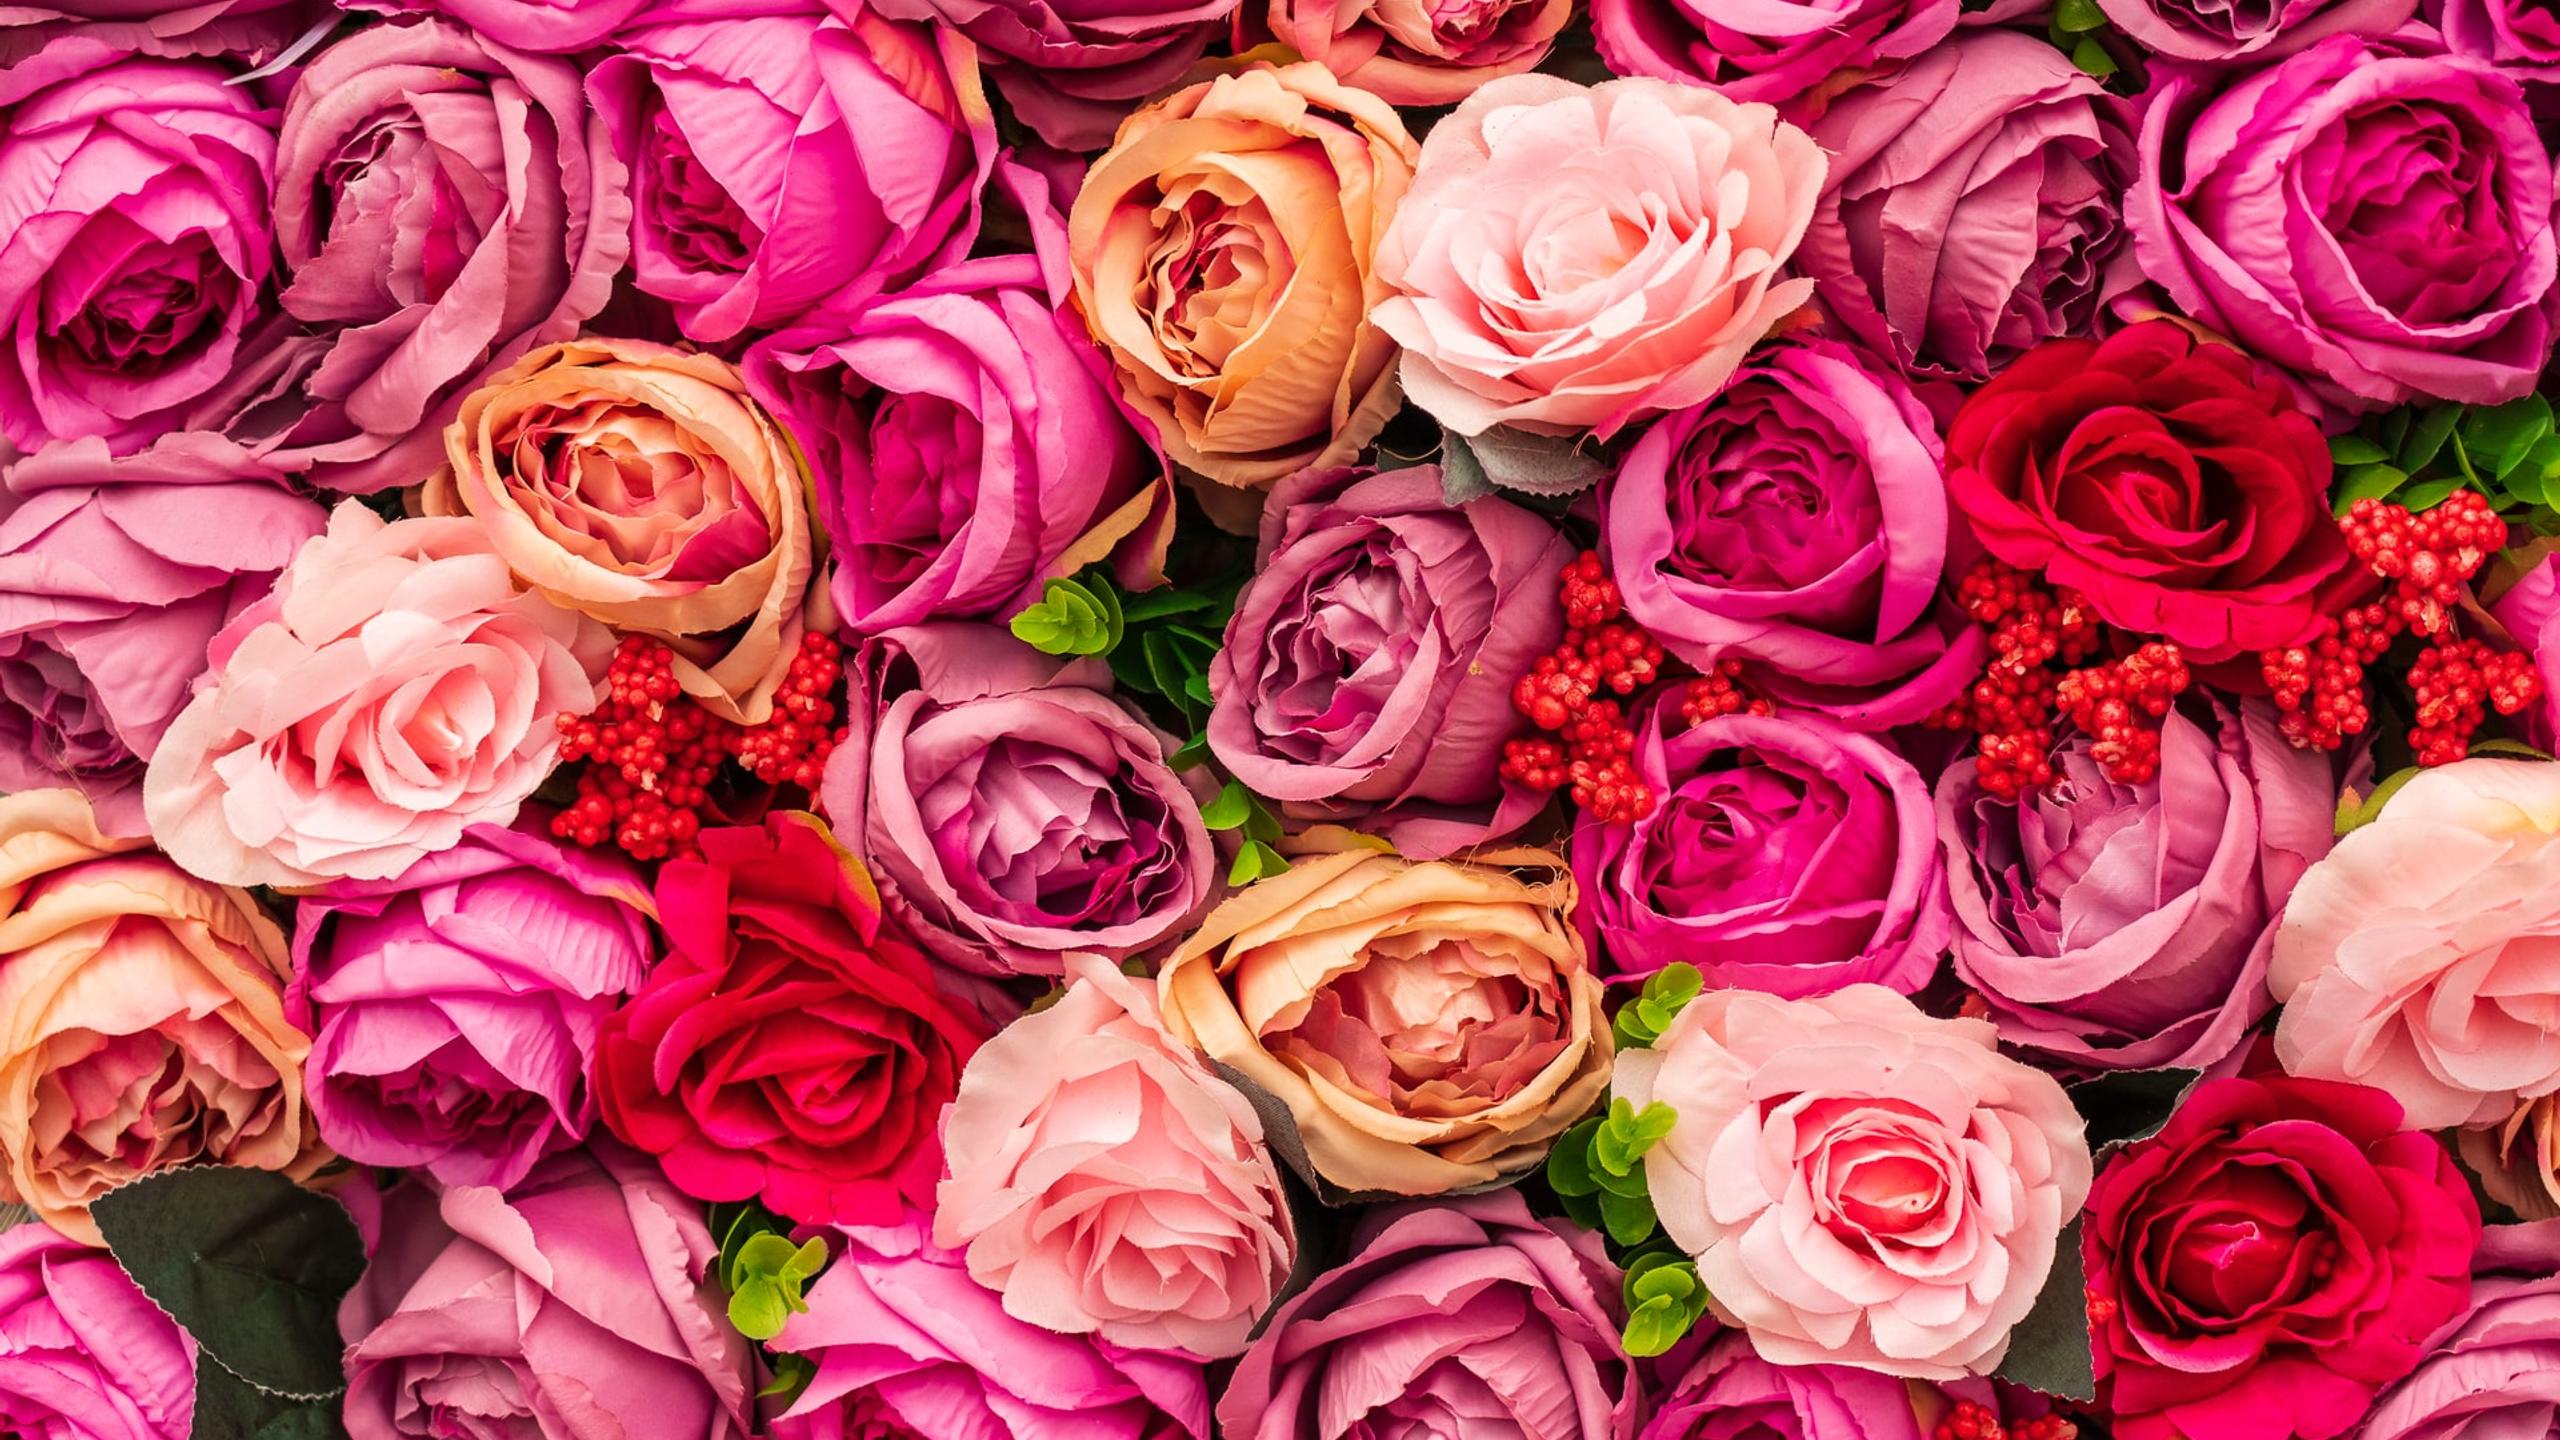 Background full of roses - HD spring perfume wallpaper